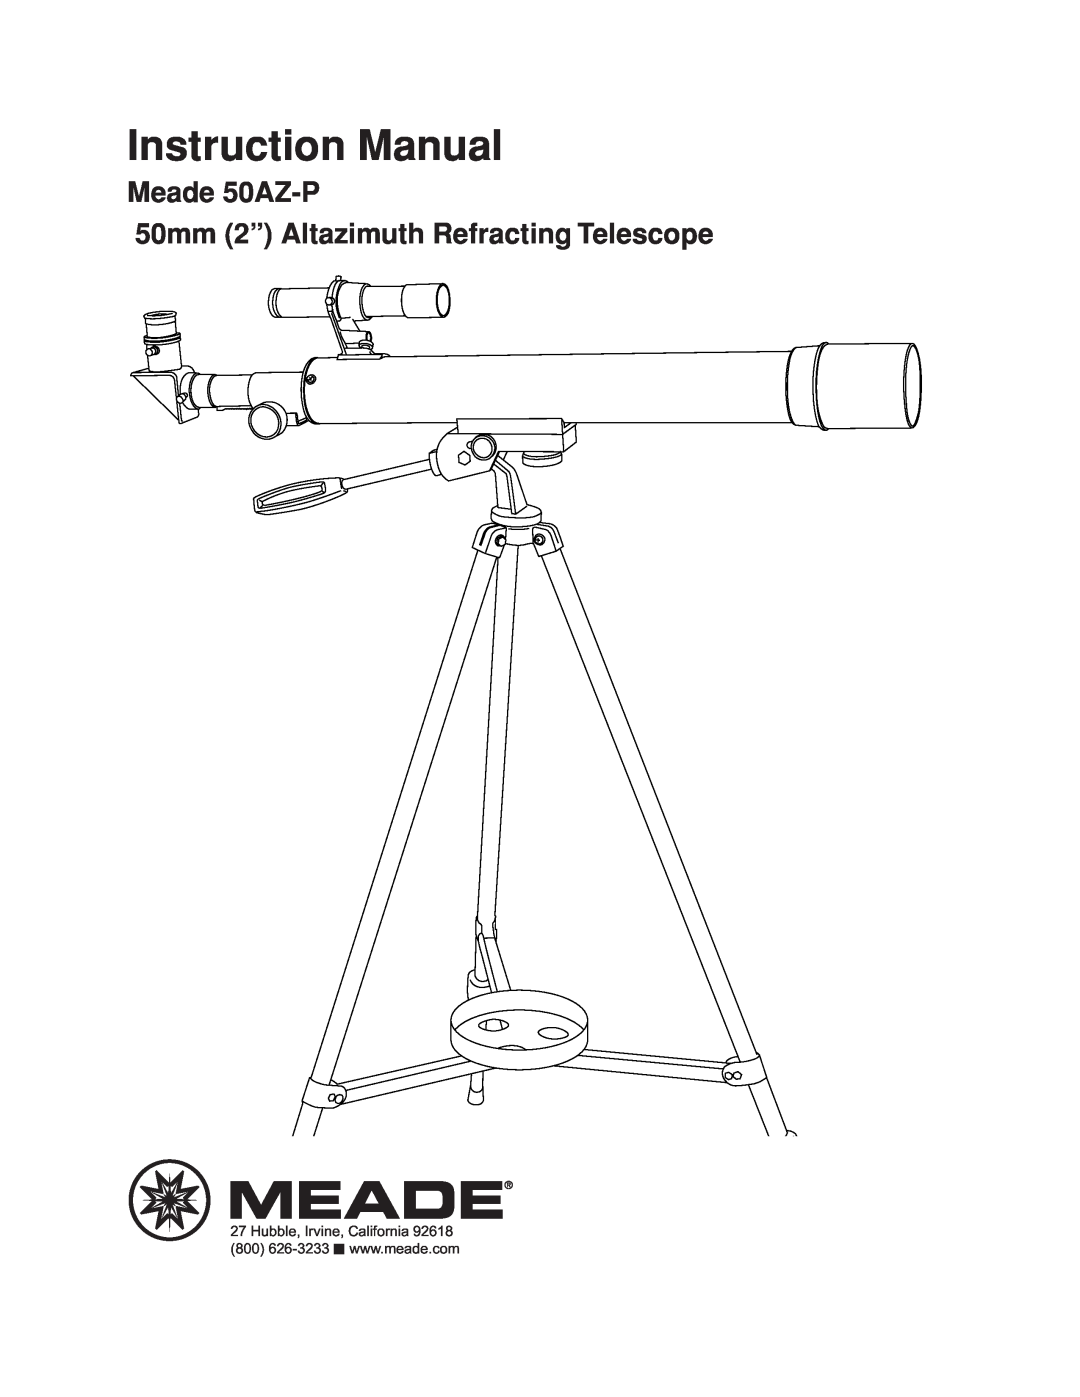 Meade instruction manual Instruction Manual, Meade 50AZ-P 50mm 2” Altazimuth Refracting Telescope 